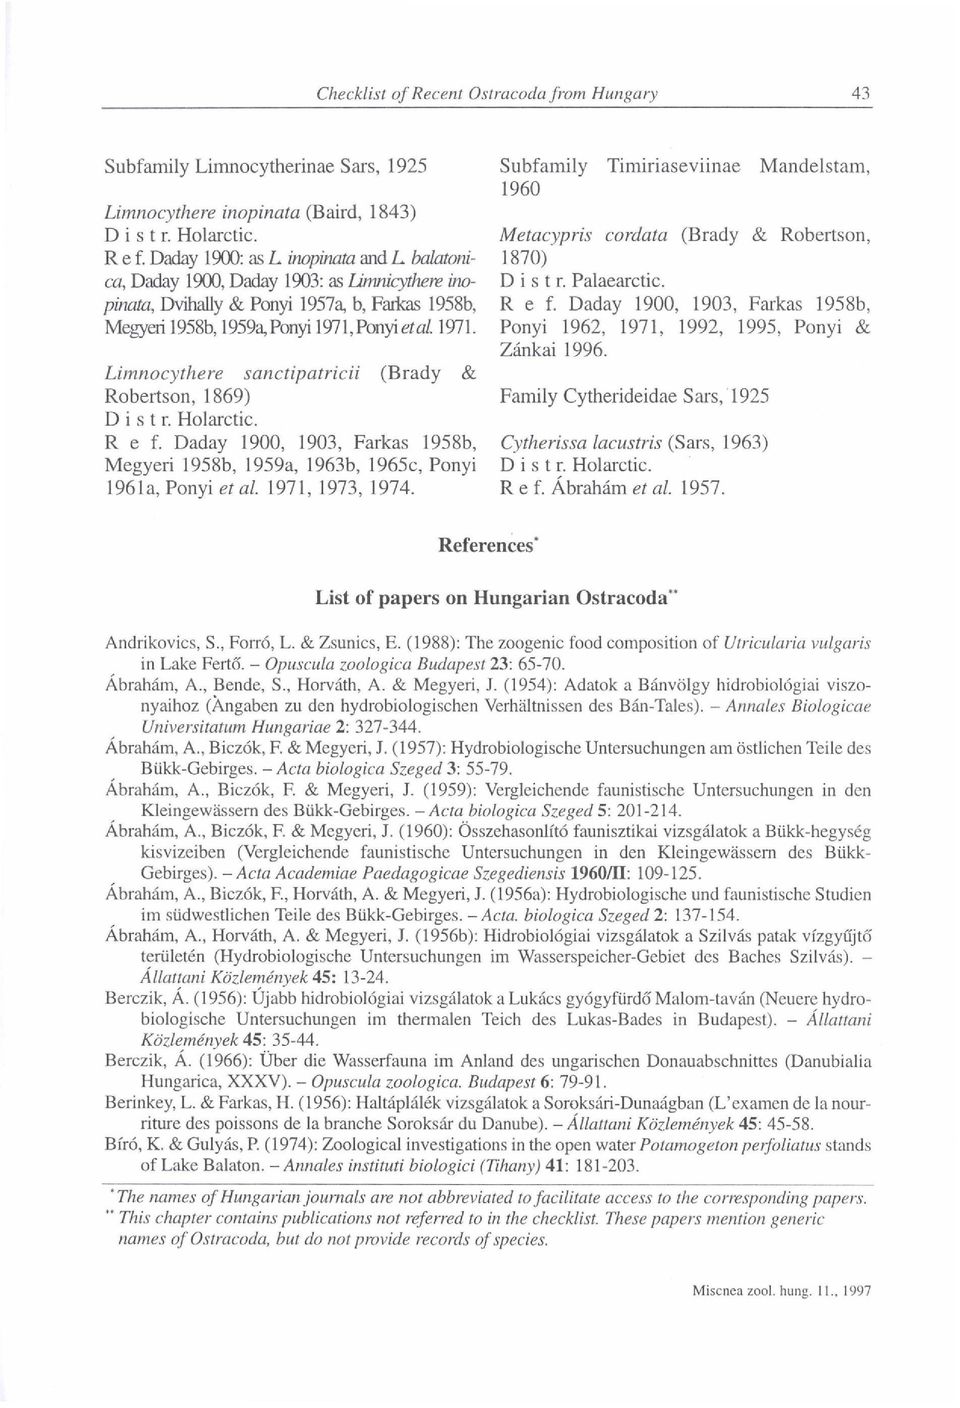 Limnocythere sanctipatricii (Brady & Robertson, 1869) Ref. Daday 1900, 1903, Farkas 1958b, Megyeri 1958b, 1959a, 1963b, 1965c, Ponyi 1961a, Ponyi et al 1971, 1973, 1974.